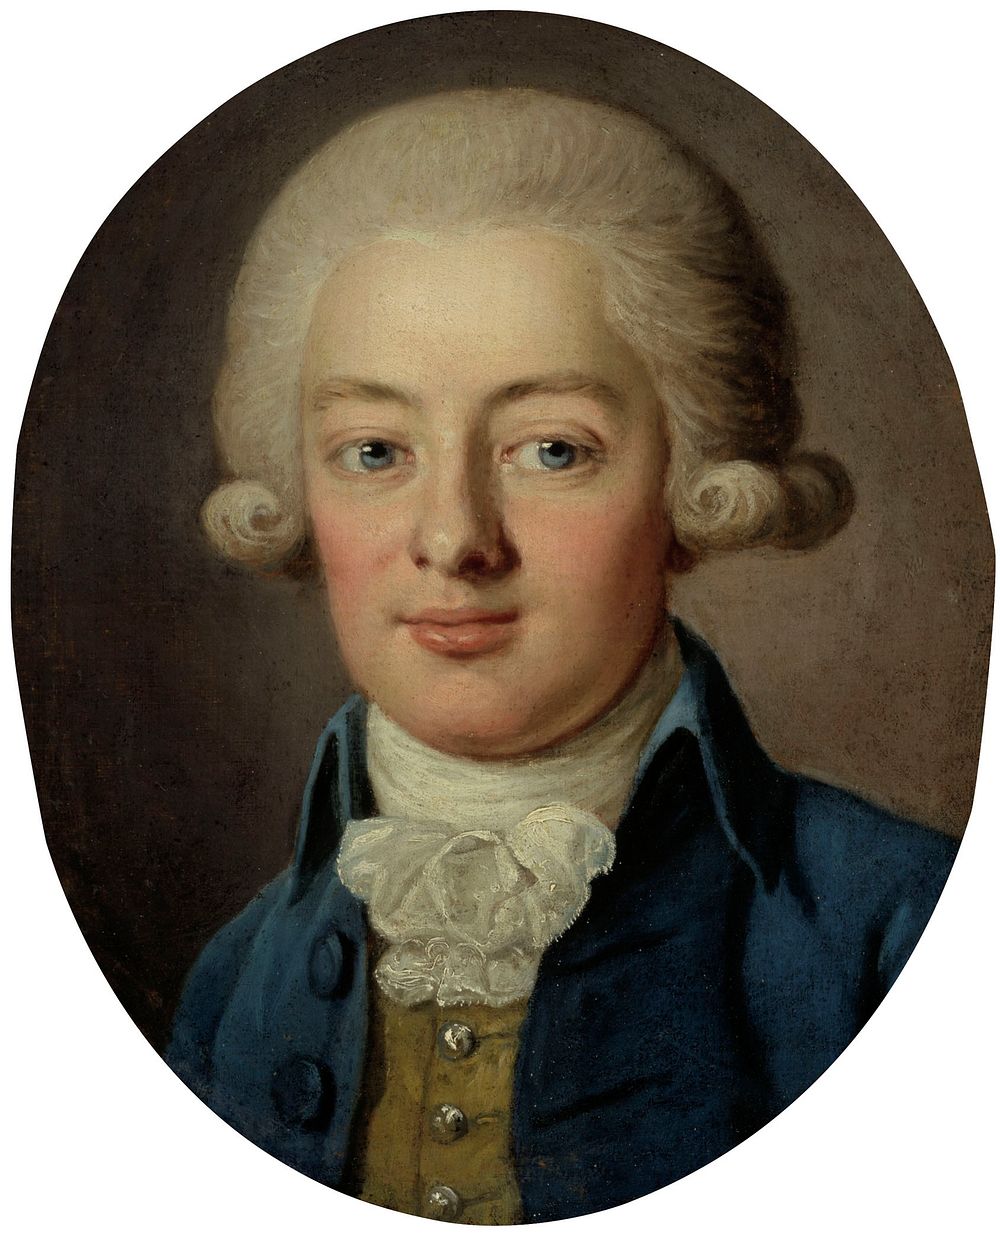 Secretary konrad arvid johan mandorf, 1744 - 1793